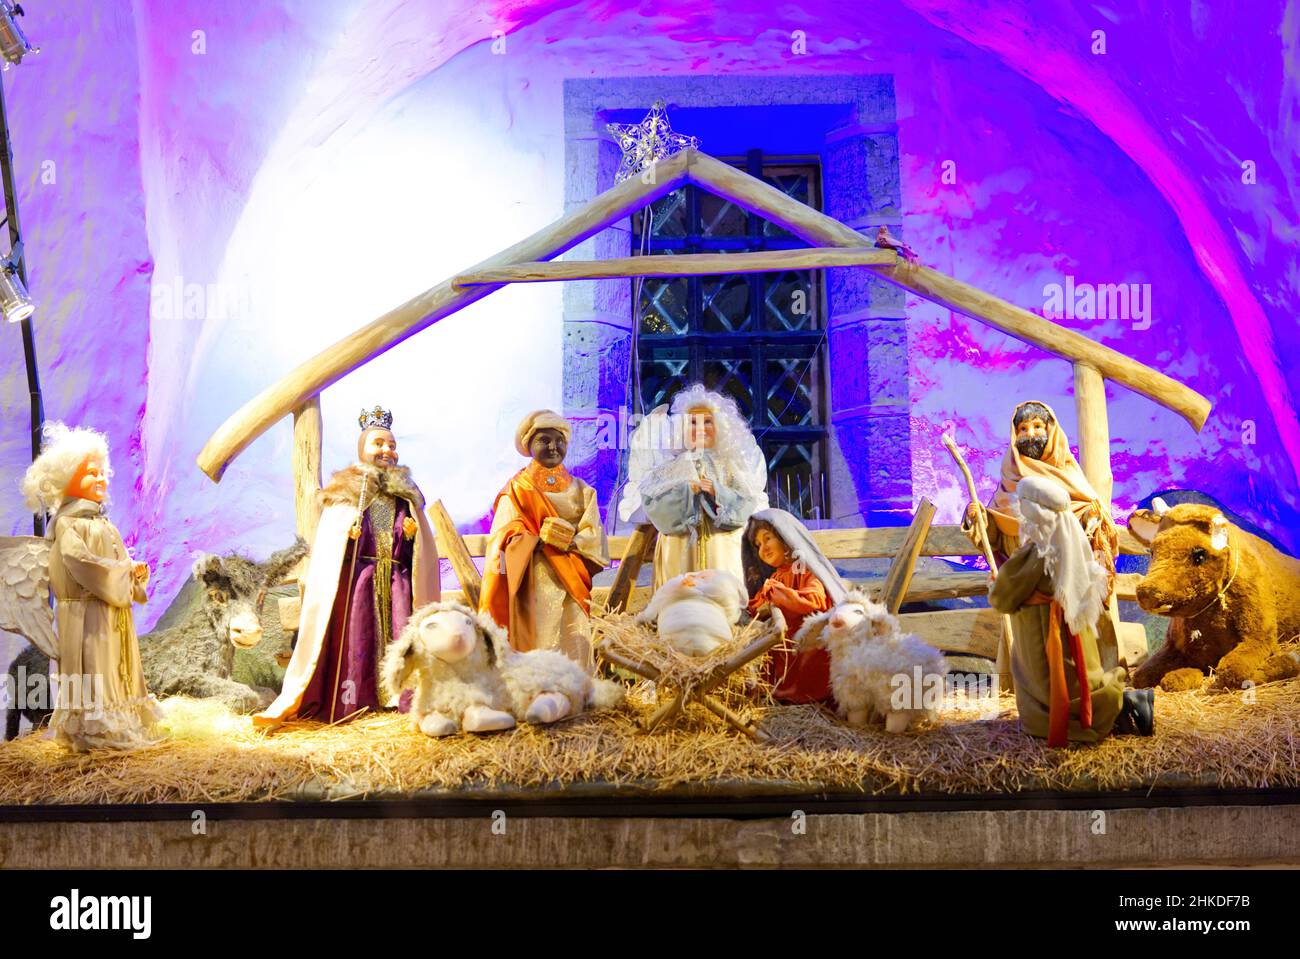 The birth of Jesus Crist scene. Holy Family and Jesus in garden. Stock Photo